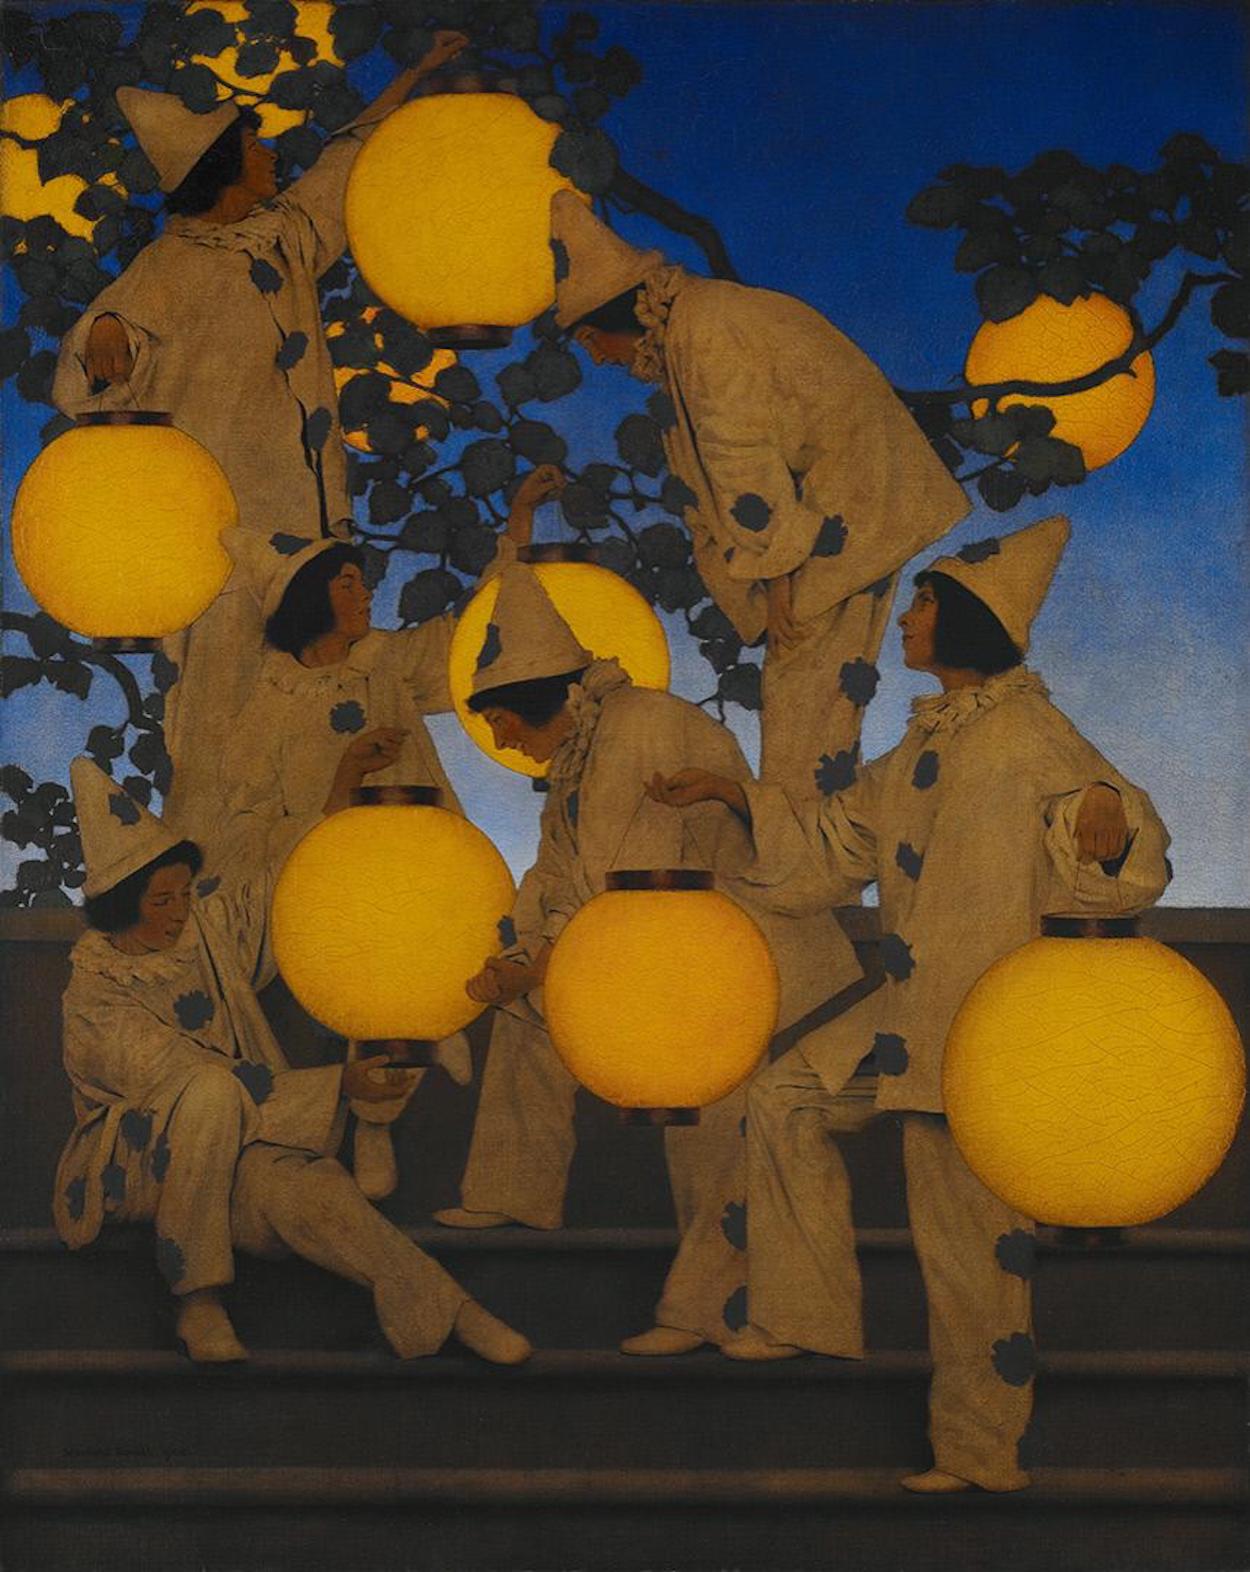 Purtătorii de lanterne by Maxfield Parrish - c. 1908 - 101.6 × 81.3 cm 